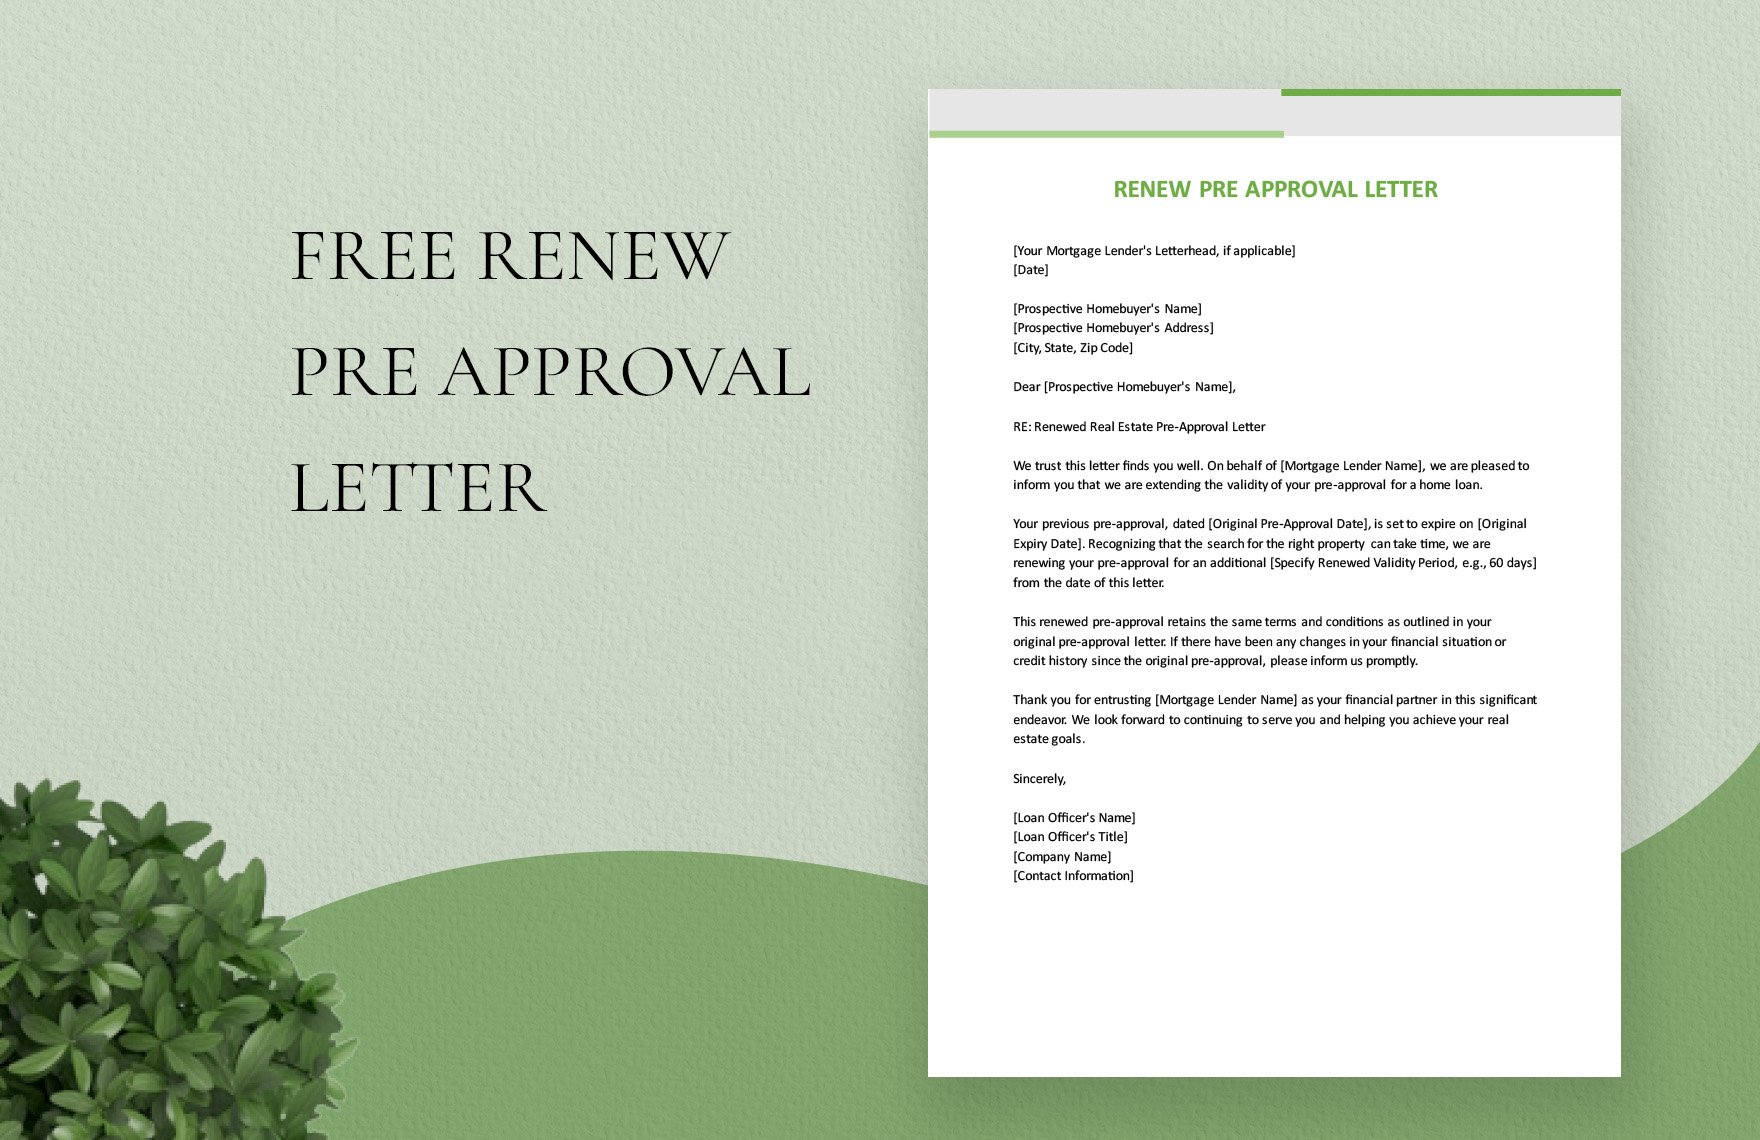 Renew Pre Approval Letter